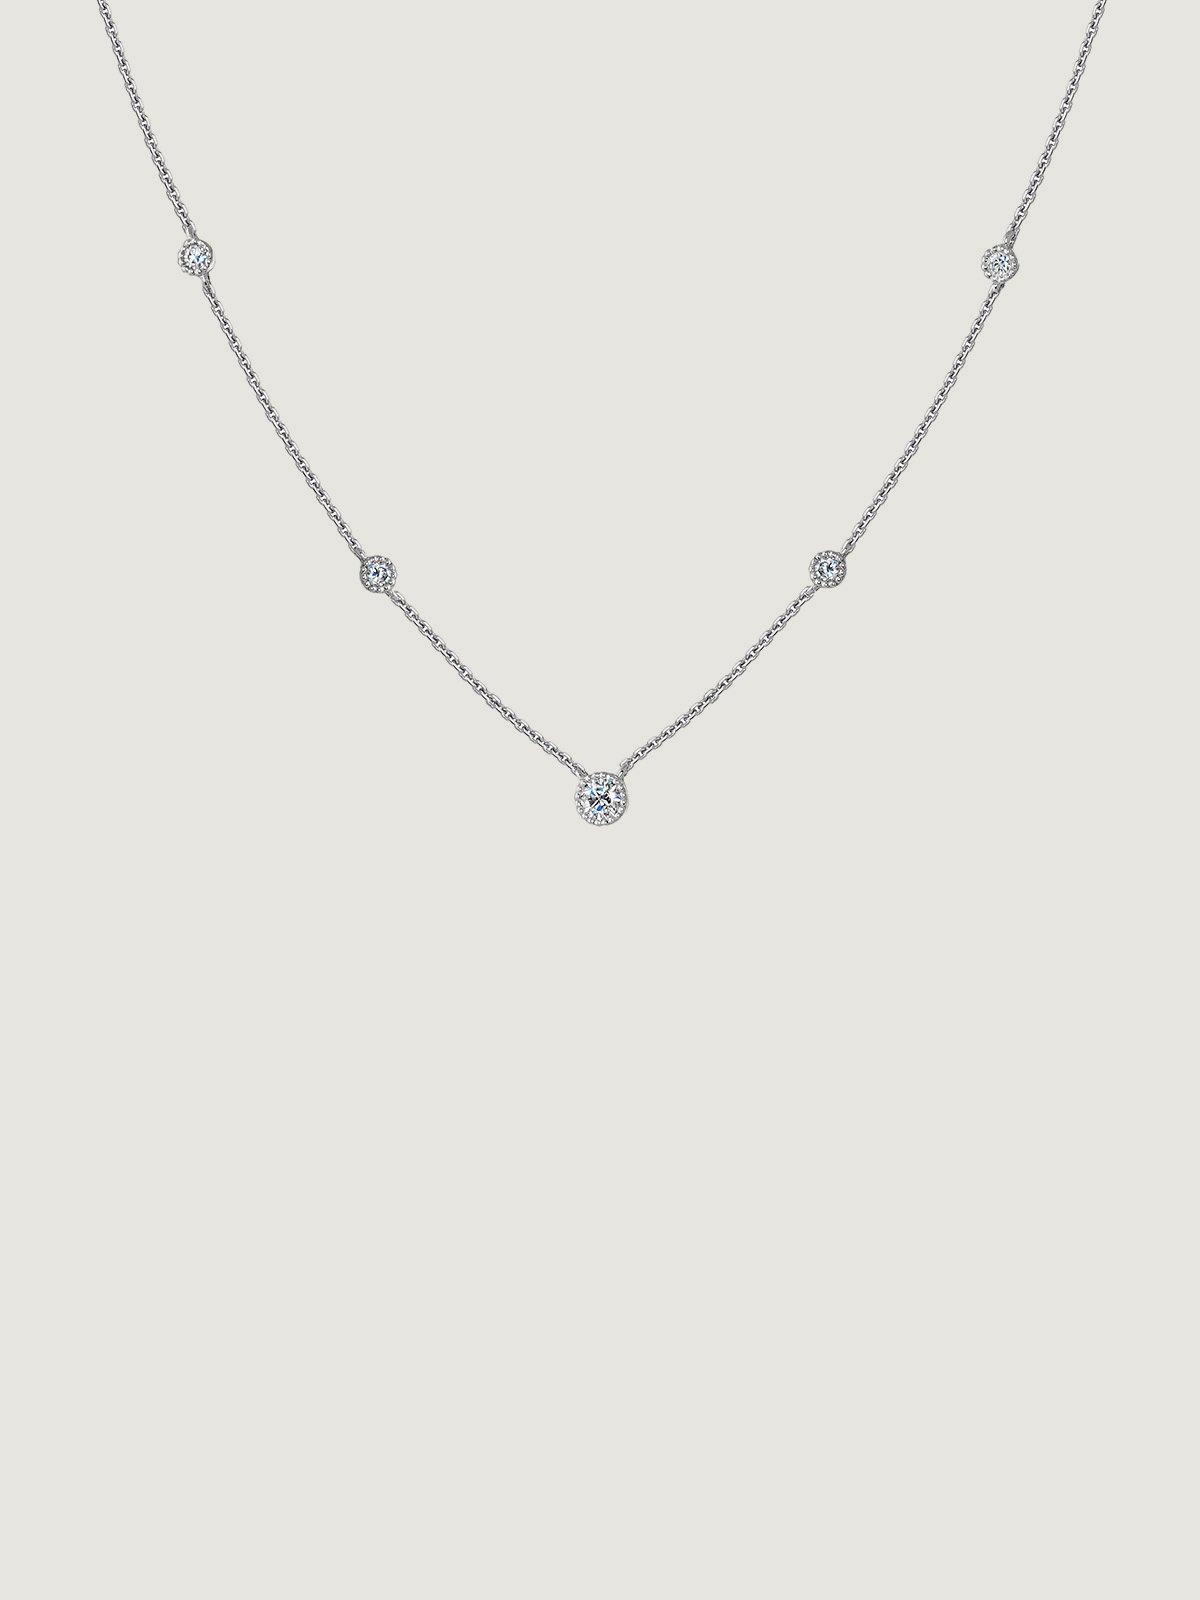 9K white gold necklace with white diamonds.